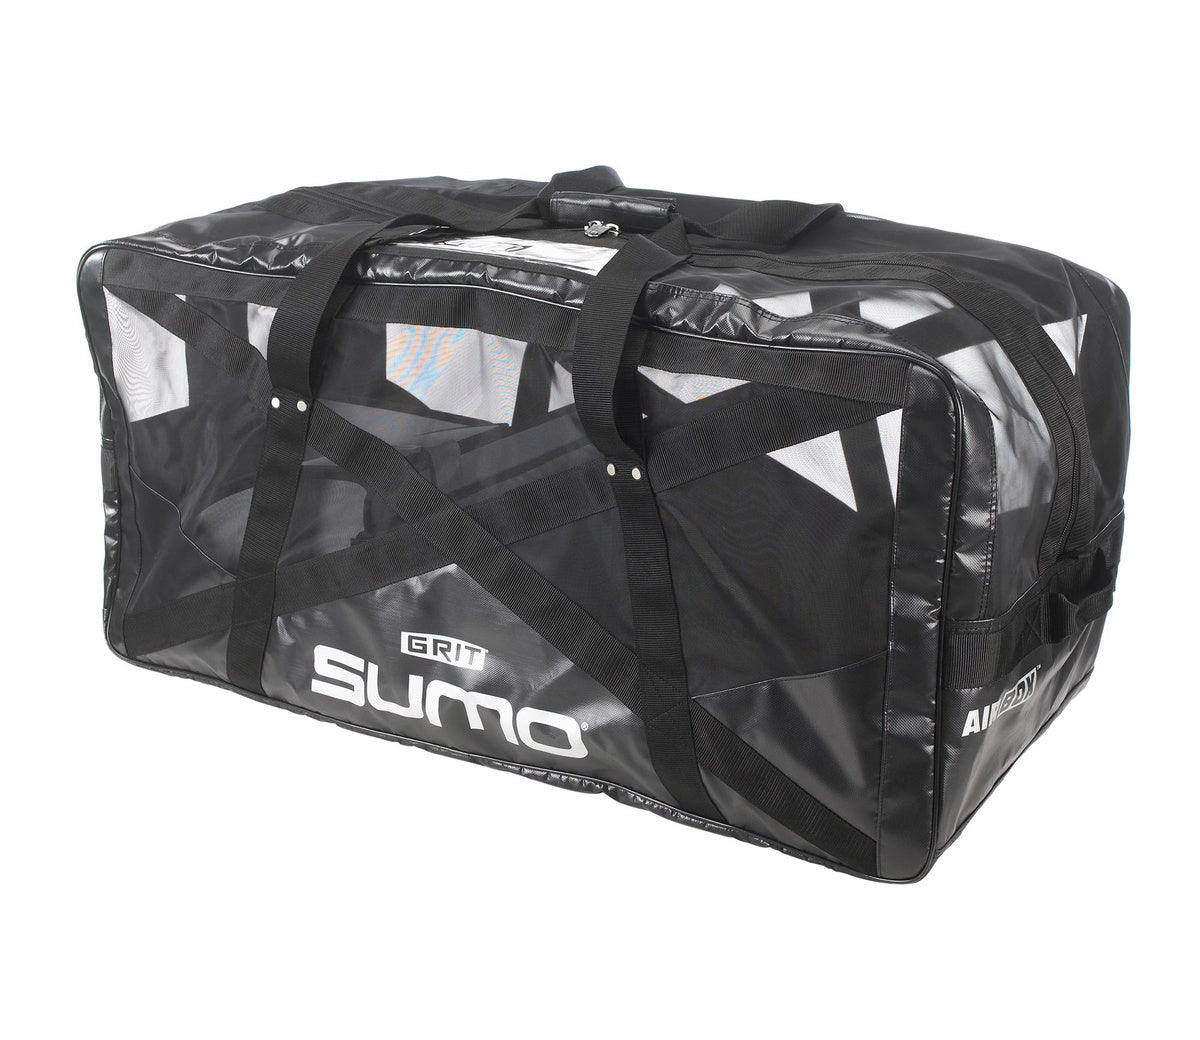 Goalkeeper ice hockey bag Goalie Grit SUMU Airbox black